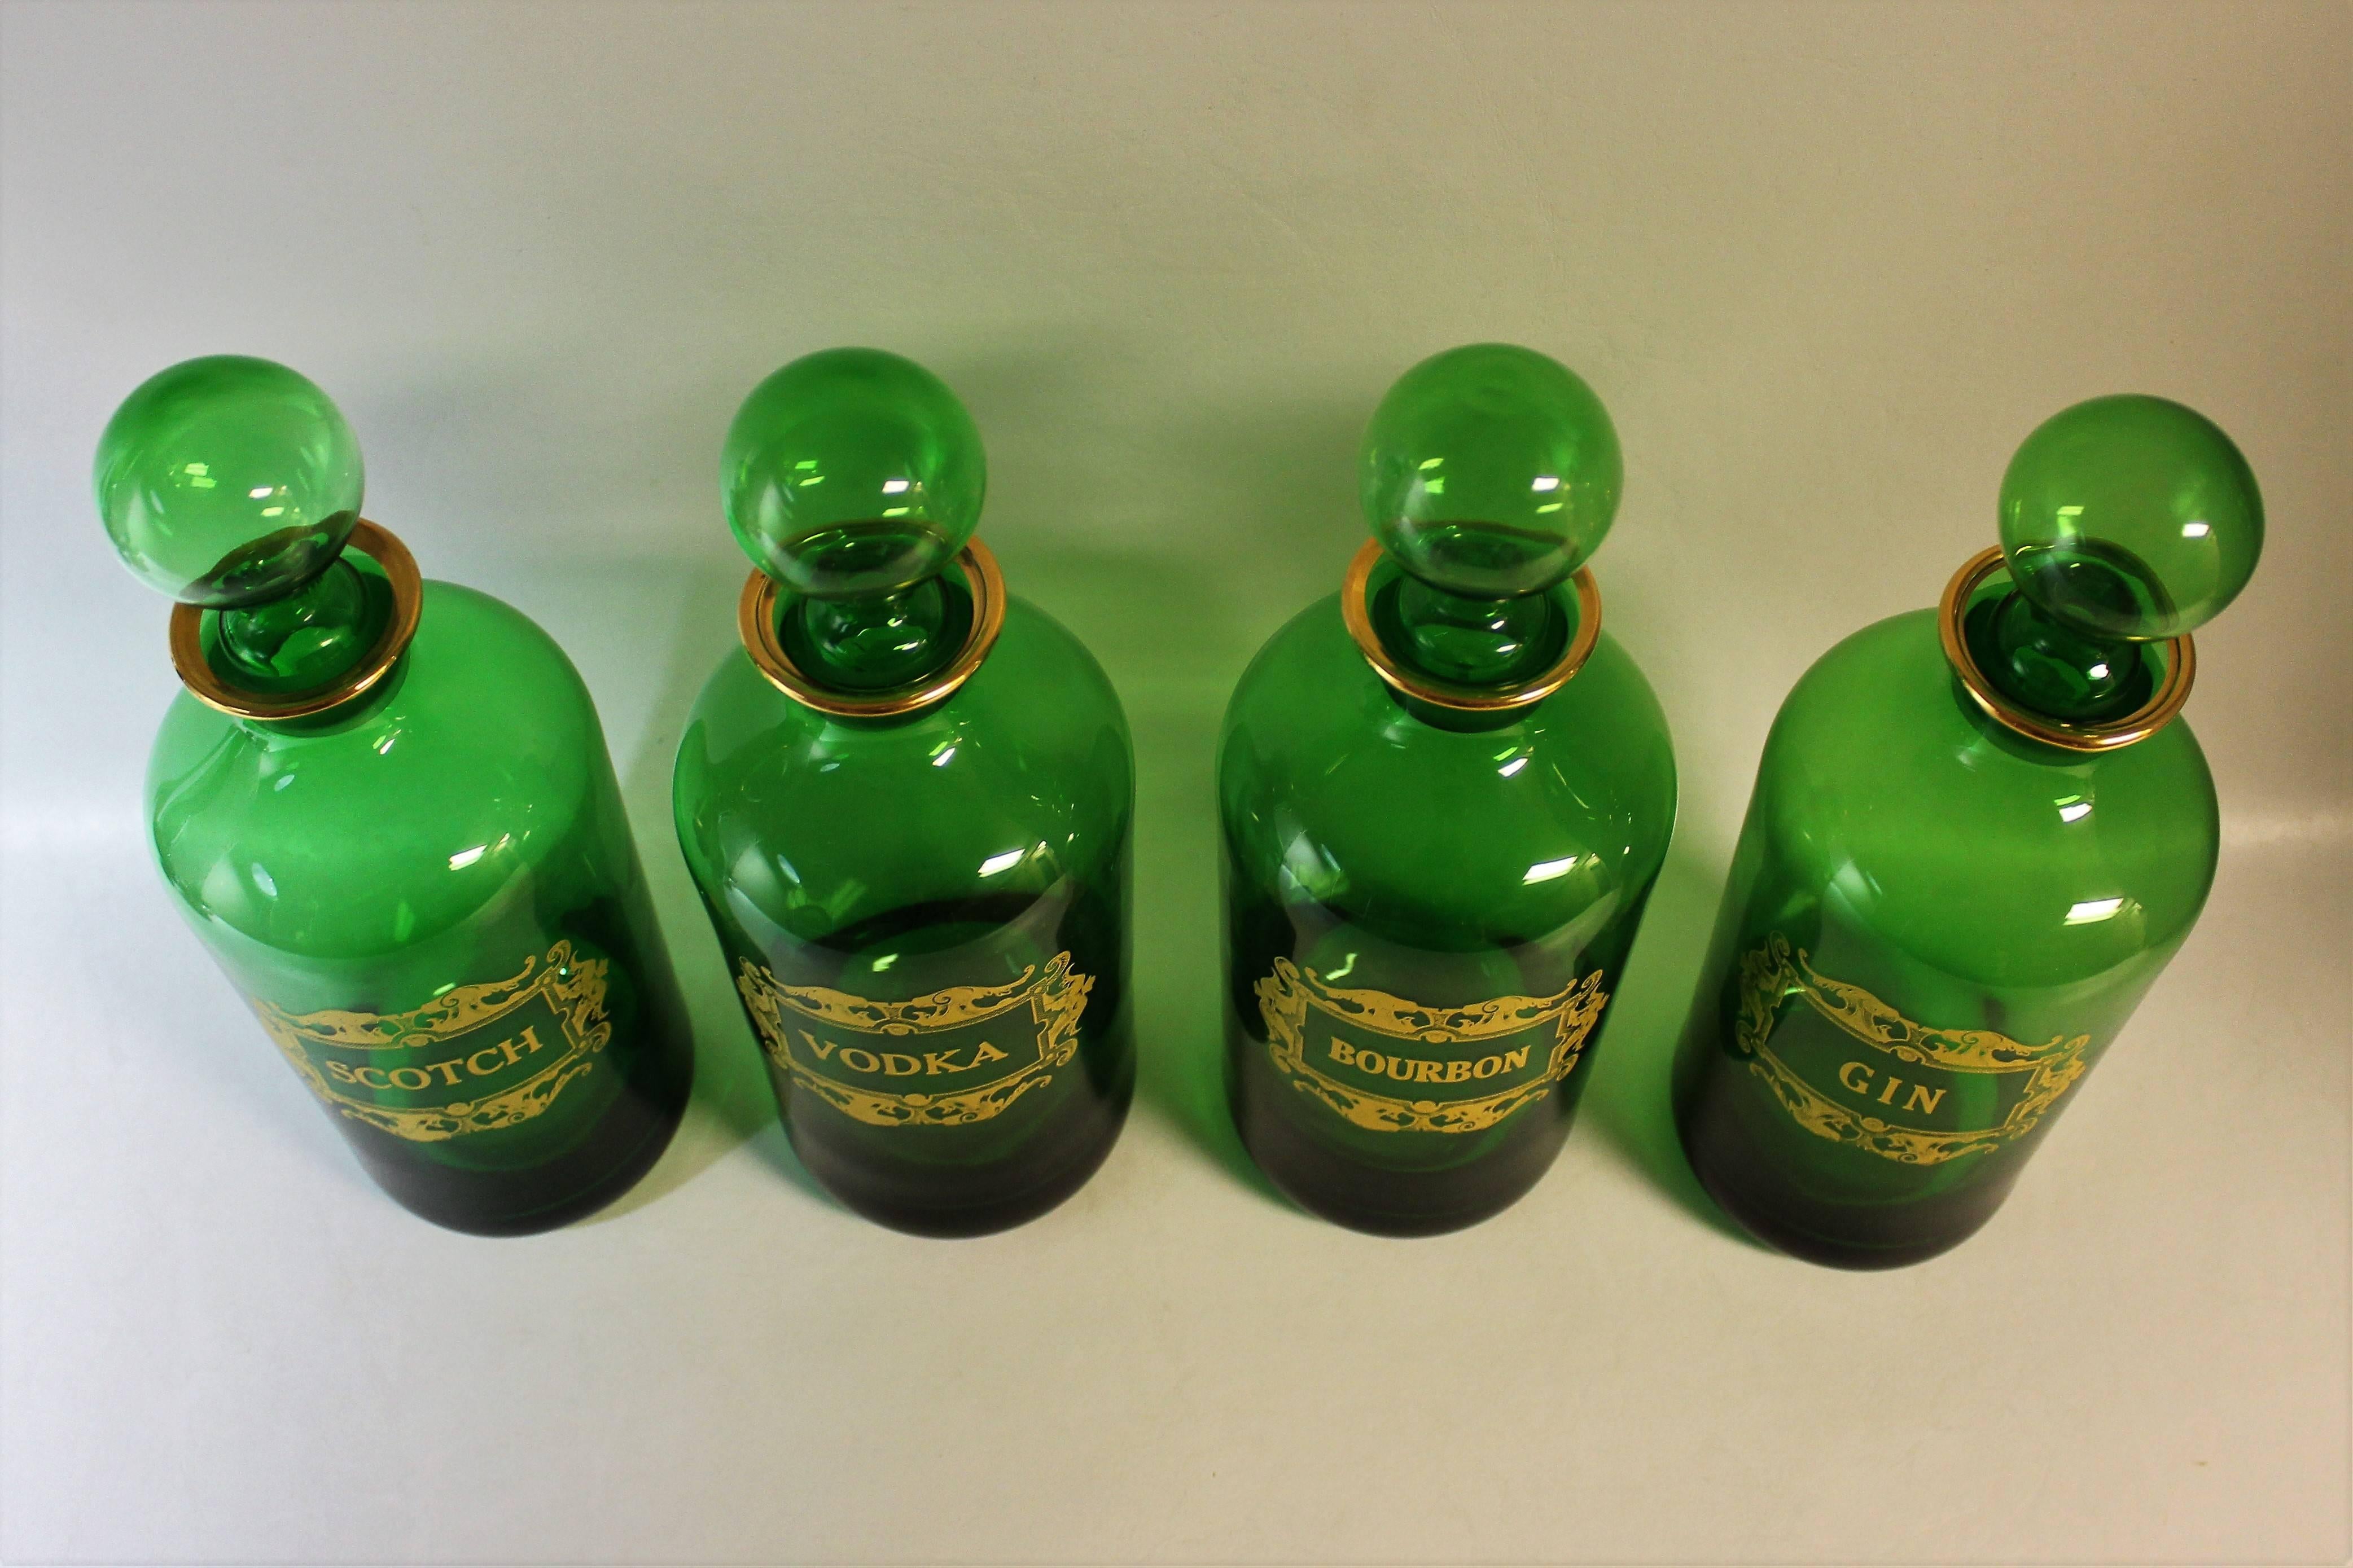 Set of four French glass gilt liquor decanter bottles: Scotch, Vodka, Bourbon, and Gin.